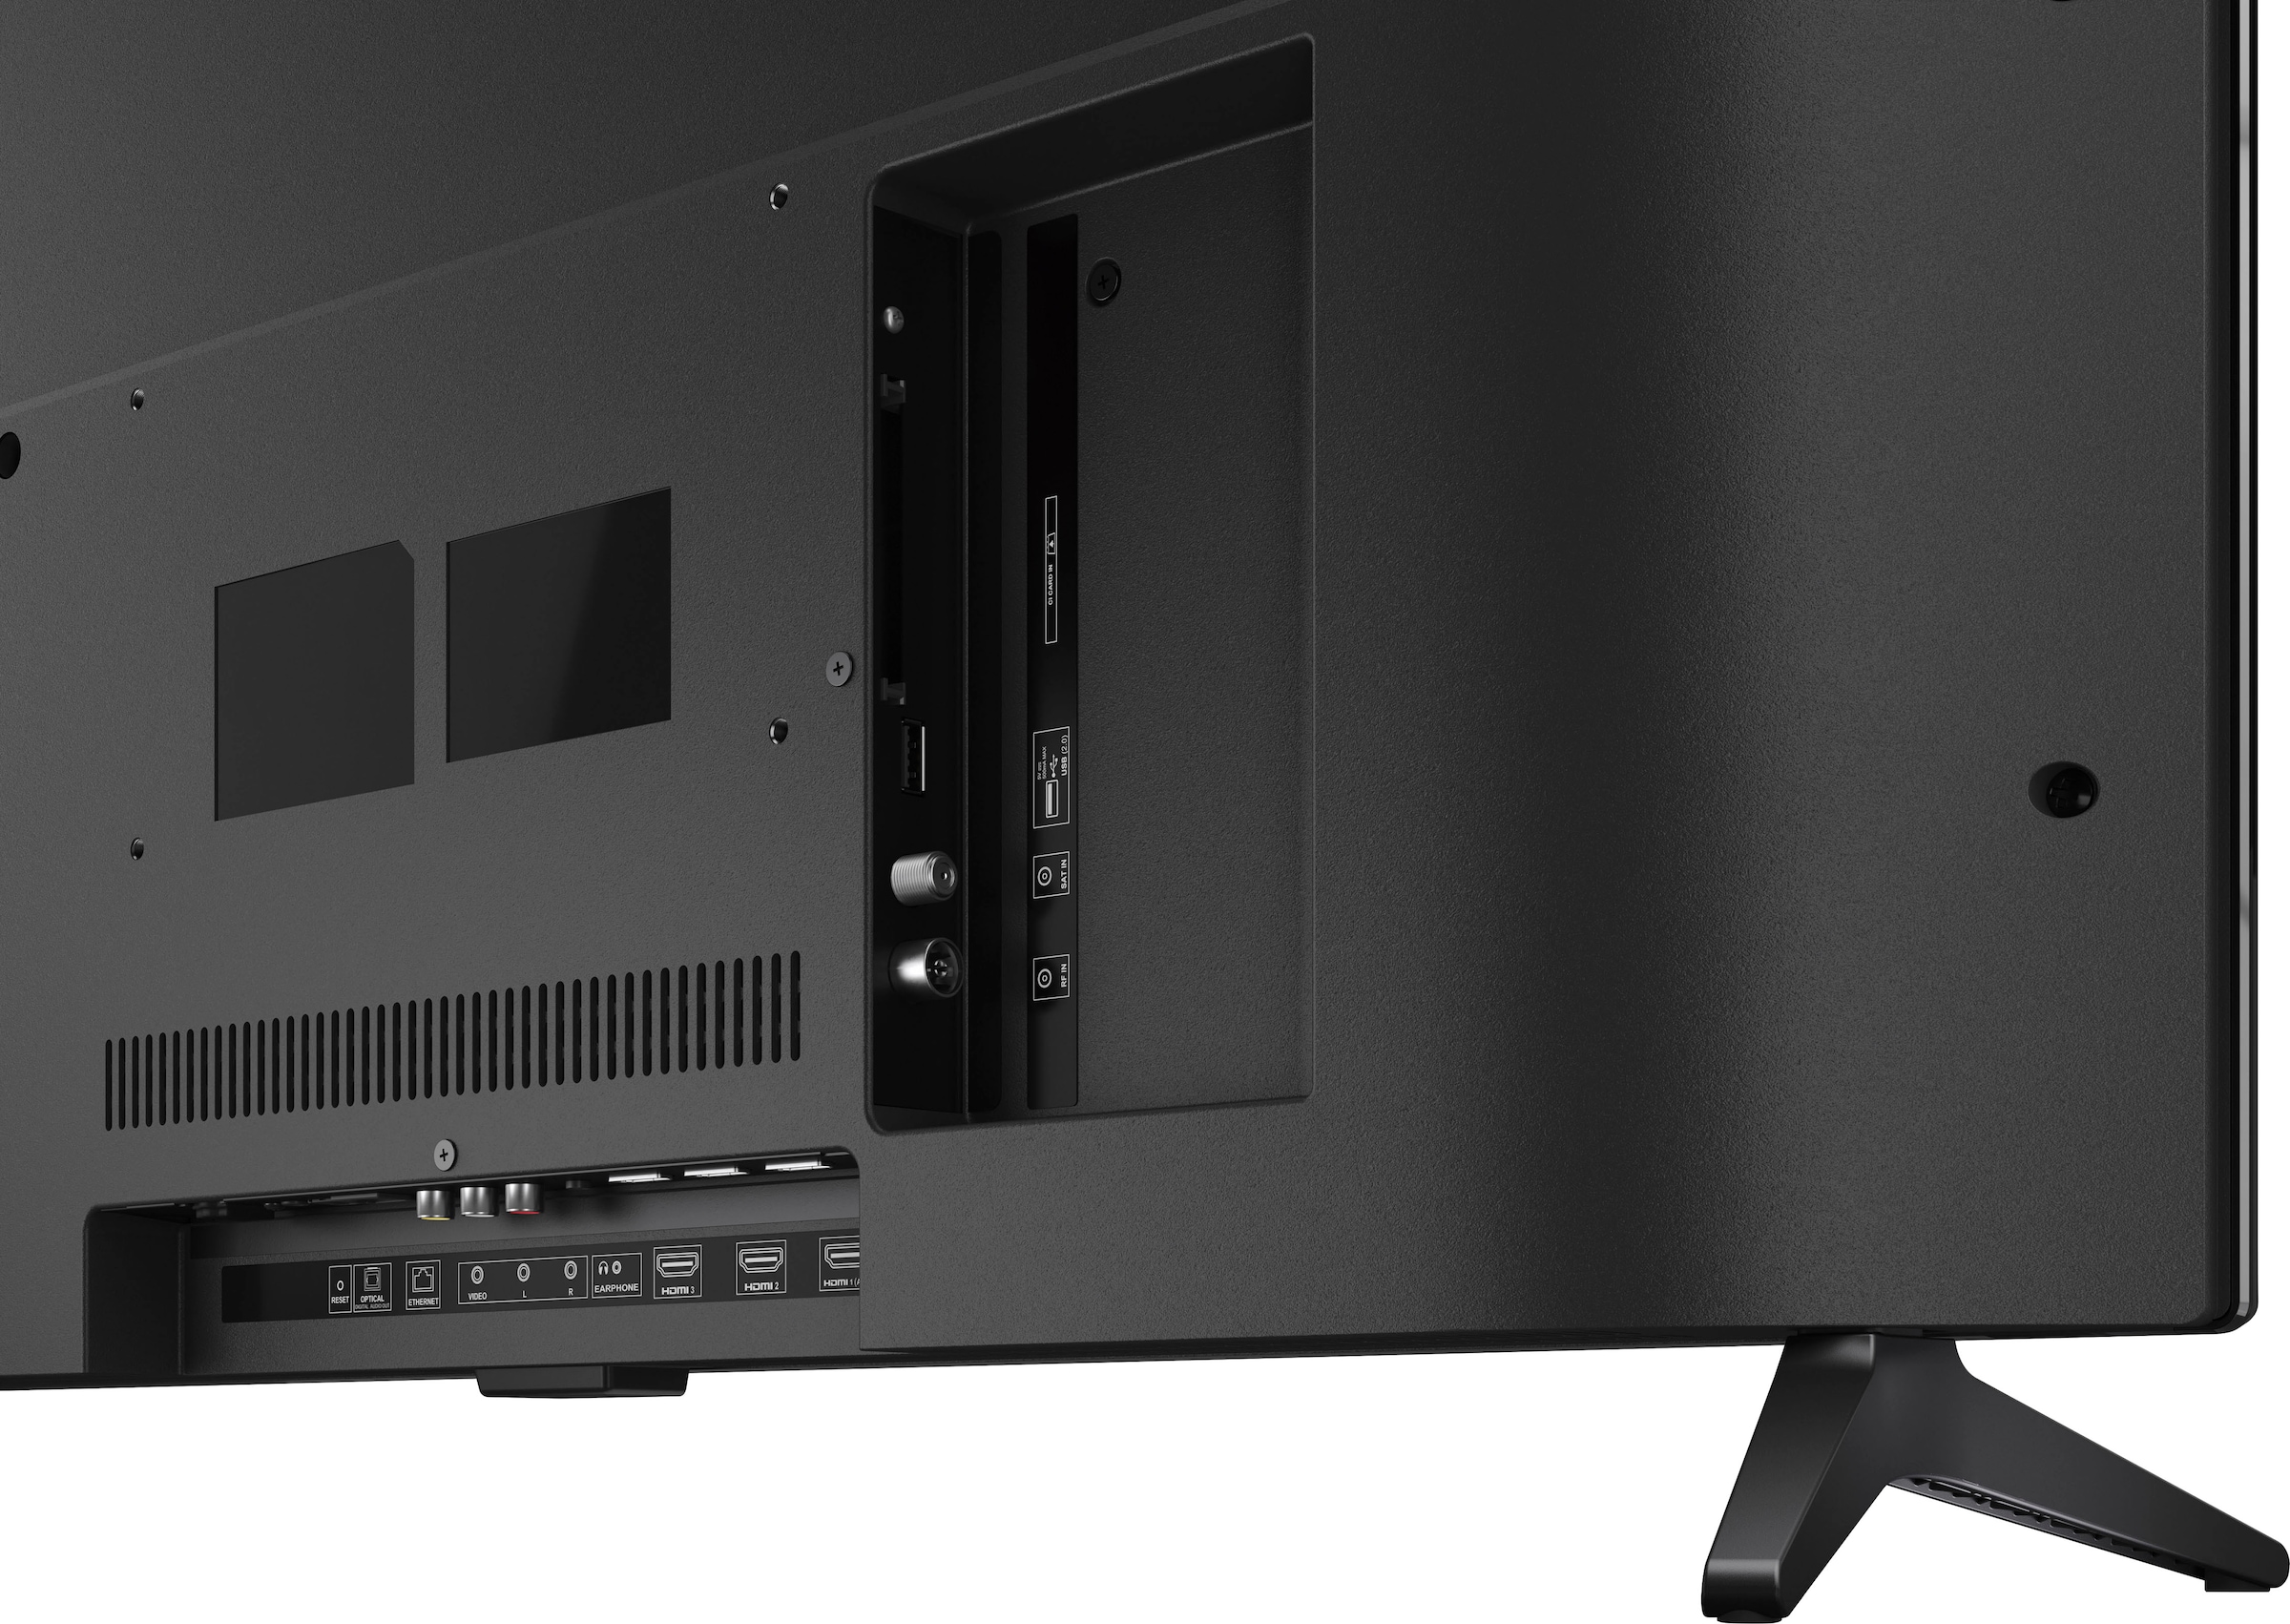 Sharp LED-Fernseher »1T-C32FDx«, 81 cm/32 Zoll, HD-ready, Smart-TV, Roku TV nur in Deutschland verfügbar, Rahmenlos, HDR10, Dolby Digital